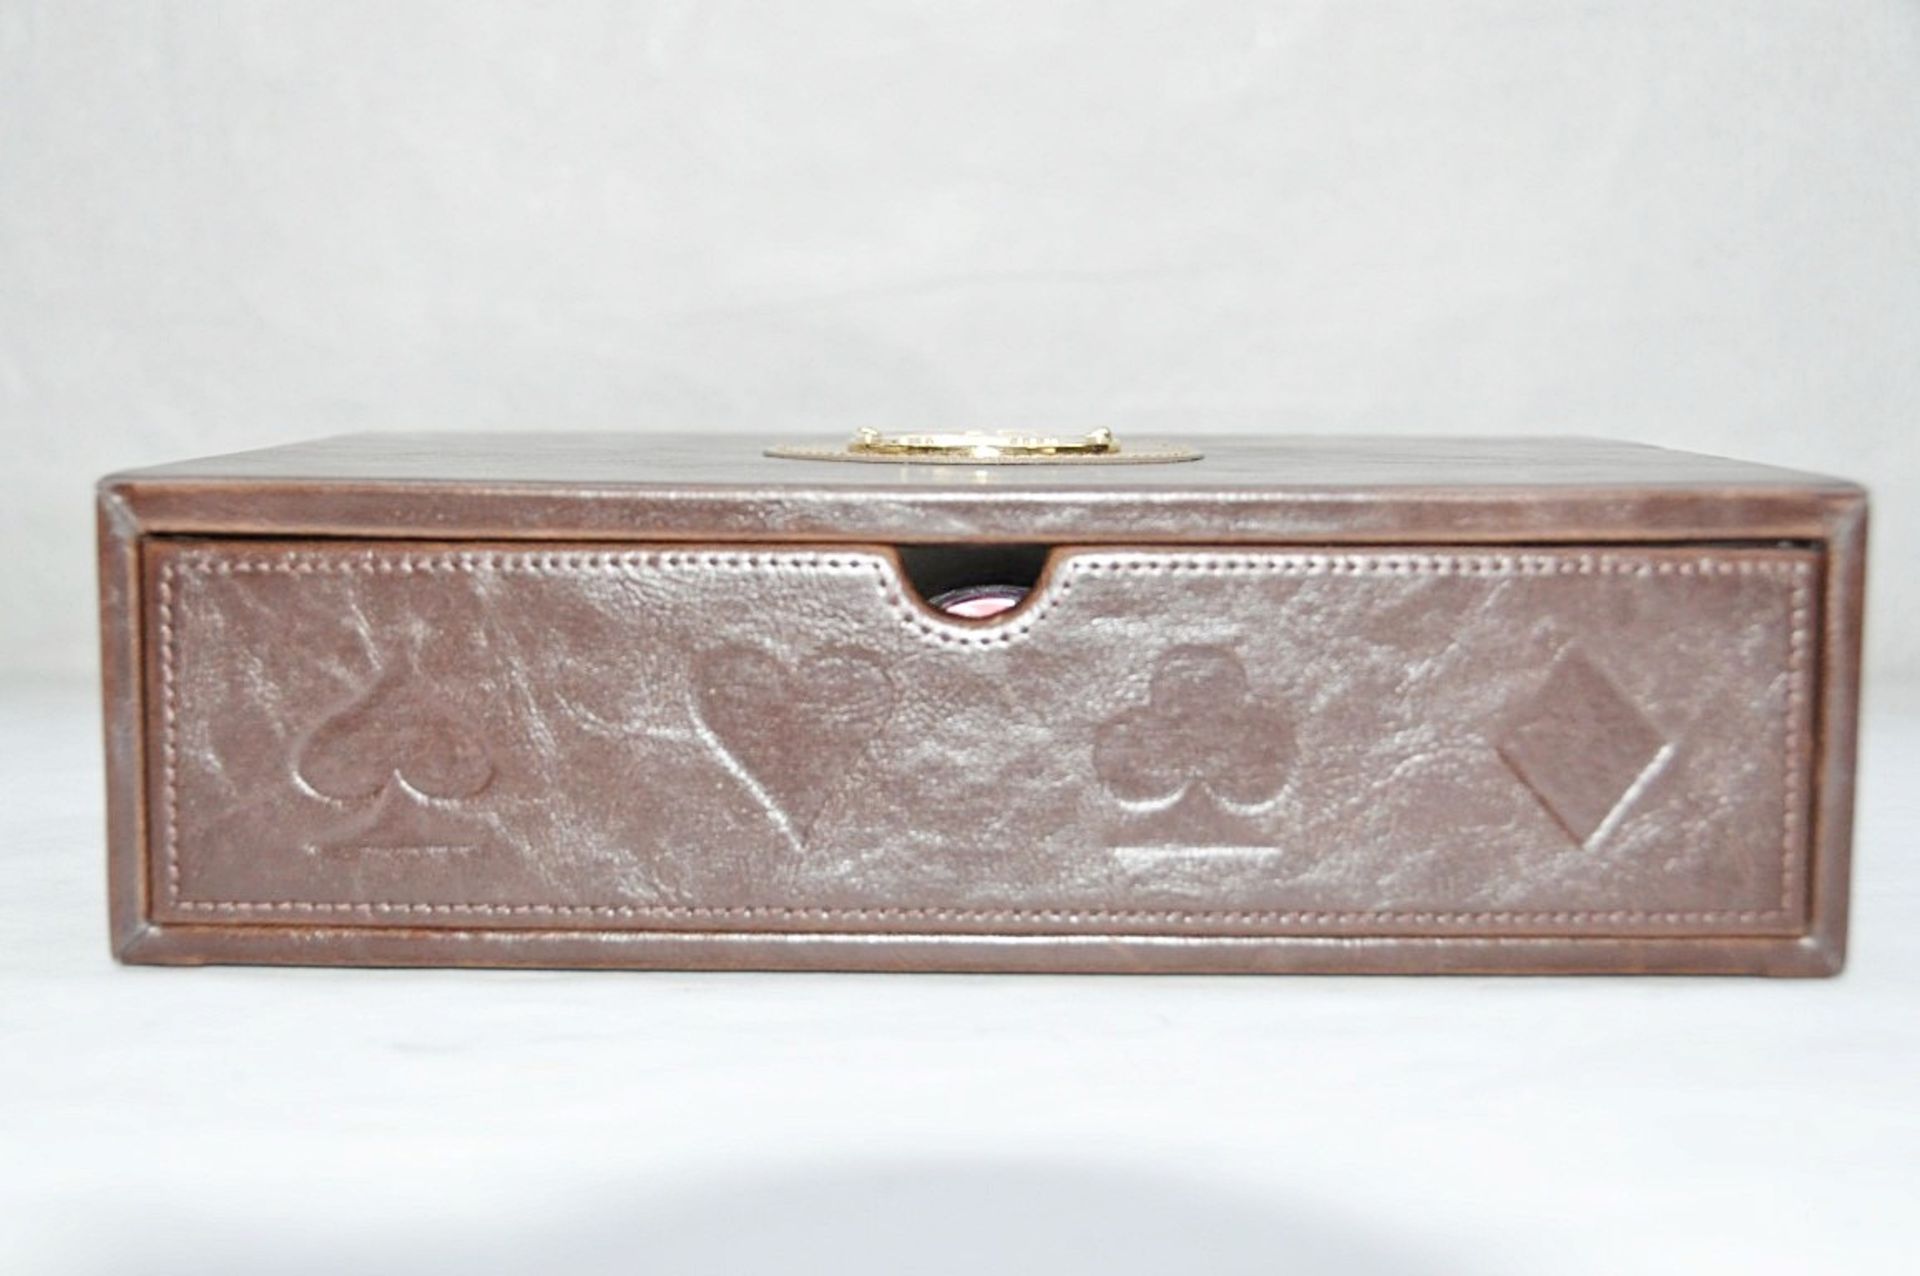 1 x "AB Collezioni" Italian Genuine Leather-Bound Luxury POKER SET (34048) - Features Beautiful - Image 2 of 8